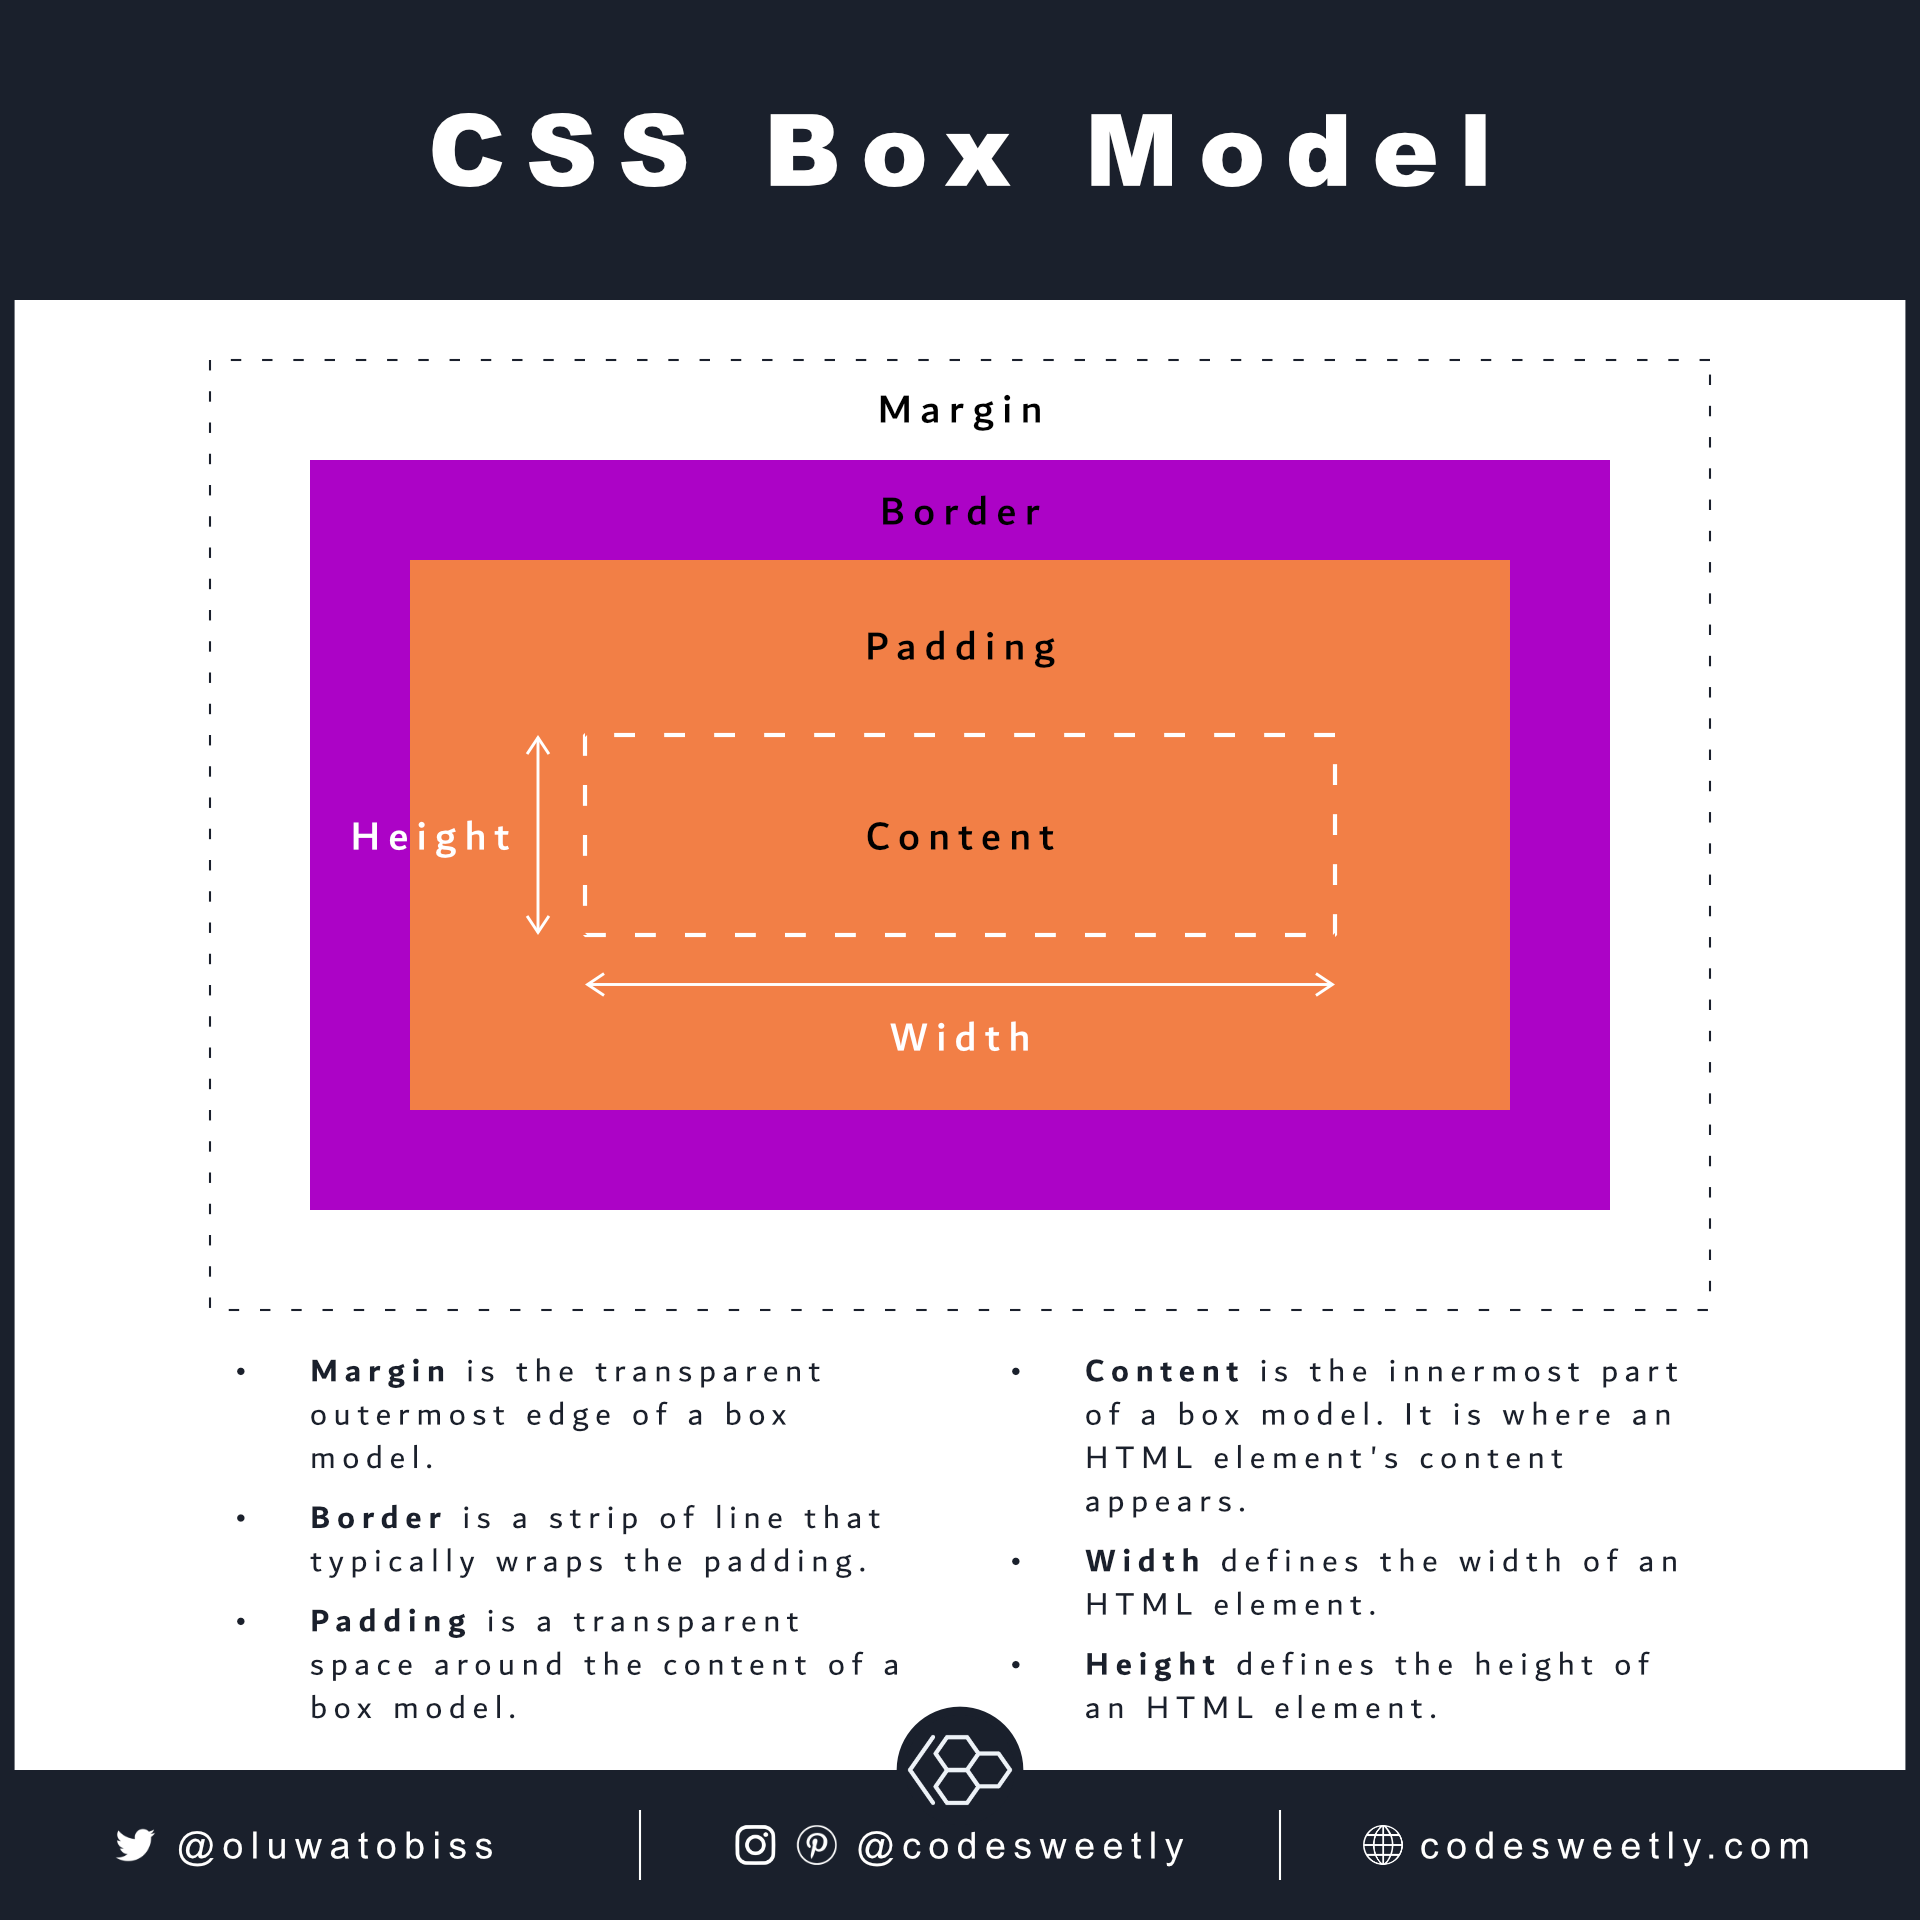 CSS box model comprises of four boxes